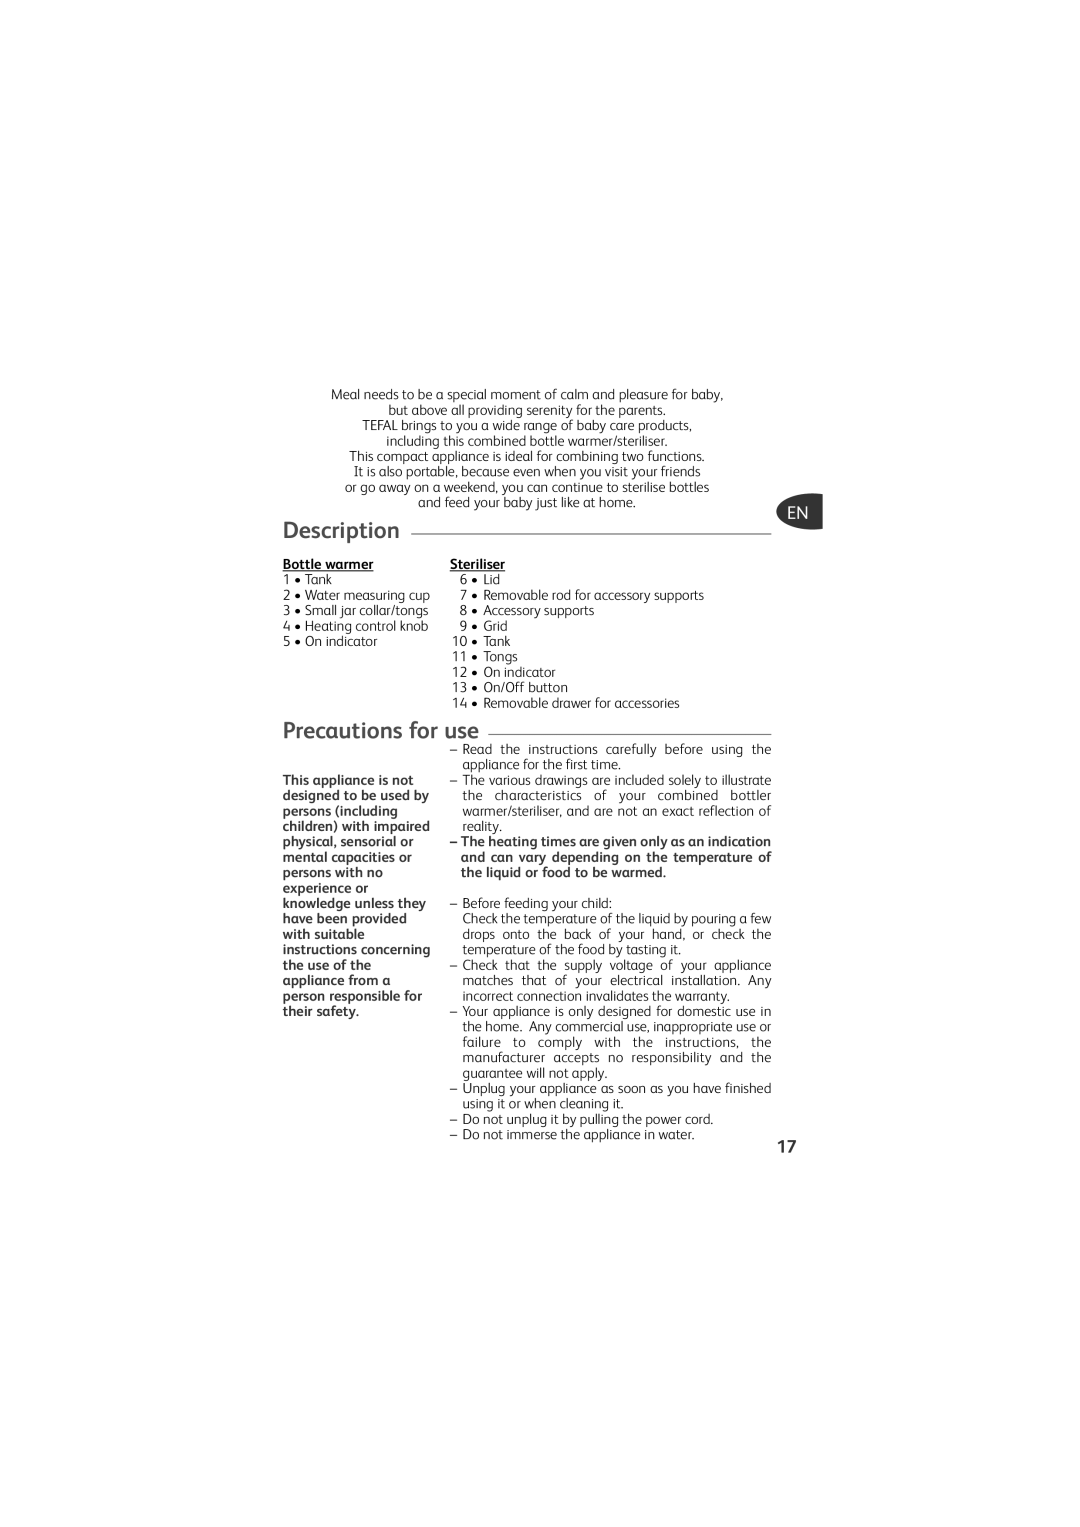 Tefal TD4200K0 manual Precautions for use, Bottle warmer, Steriliser, Description 